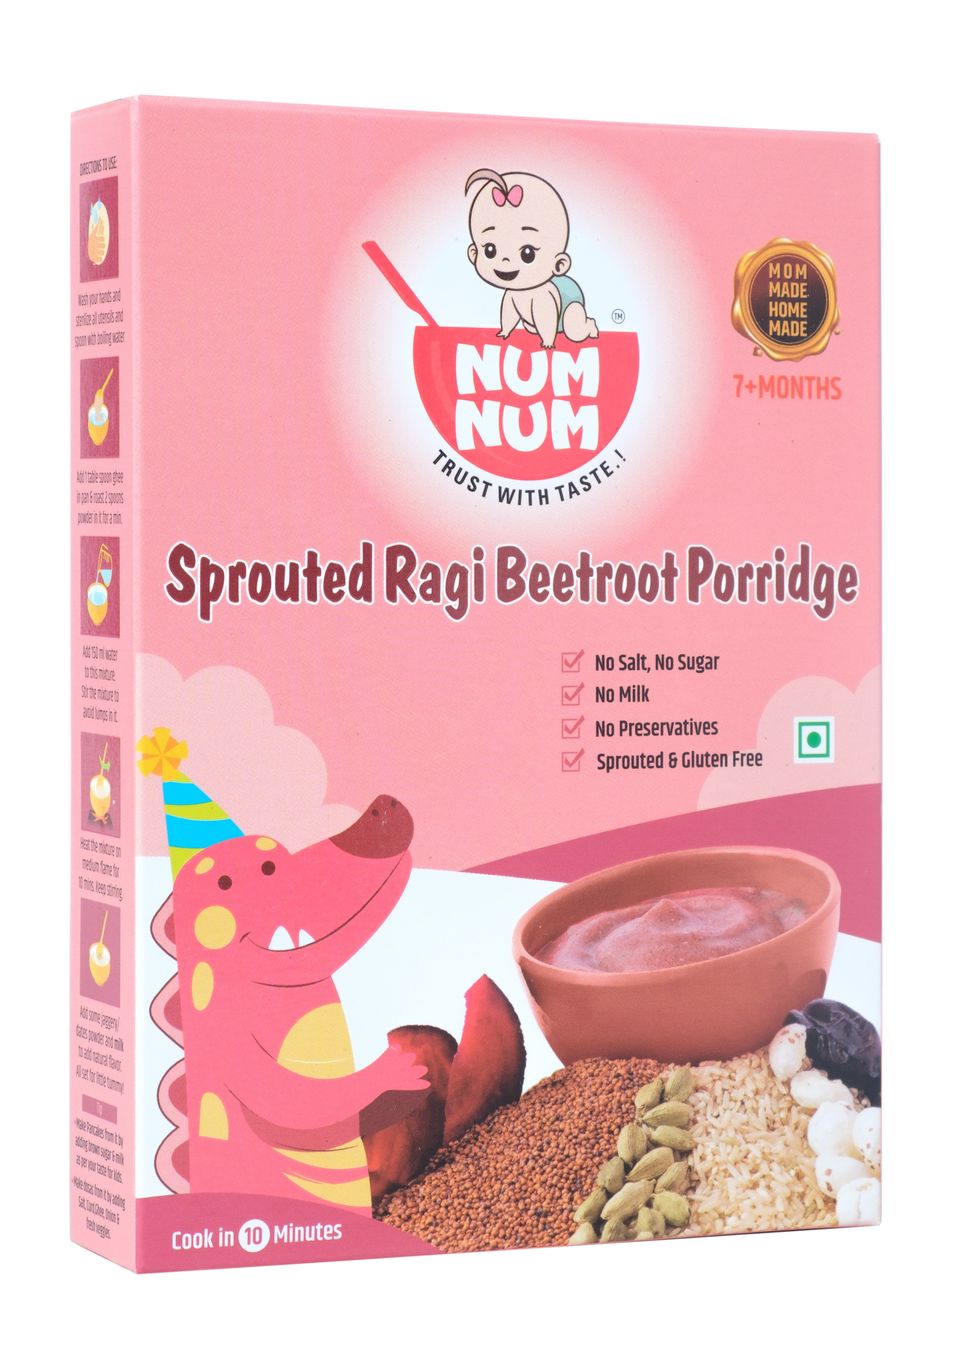 Sprouted Ragi Beetroot Porridge